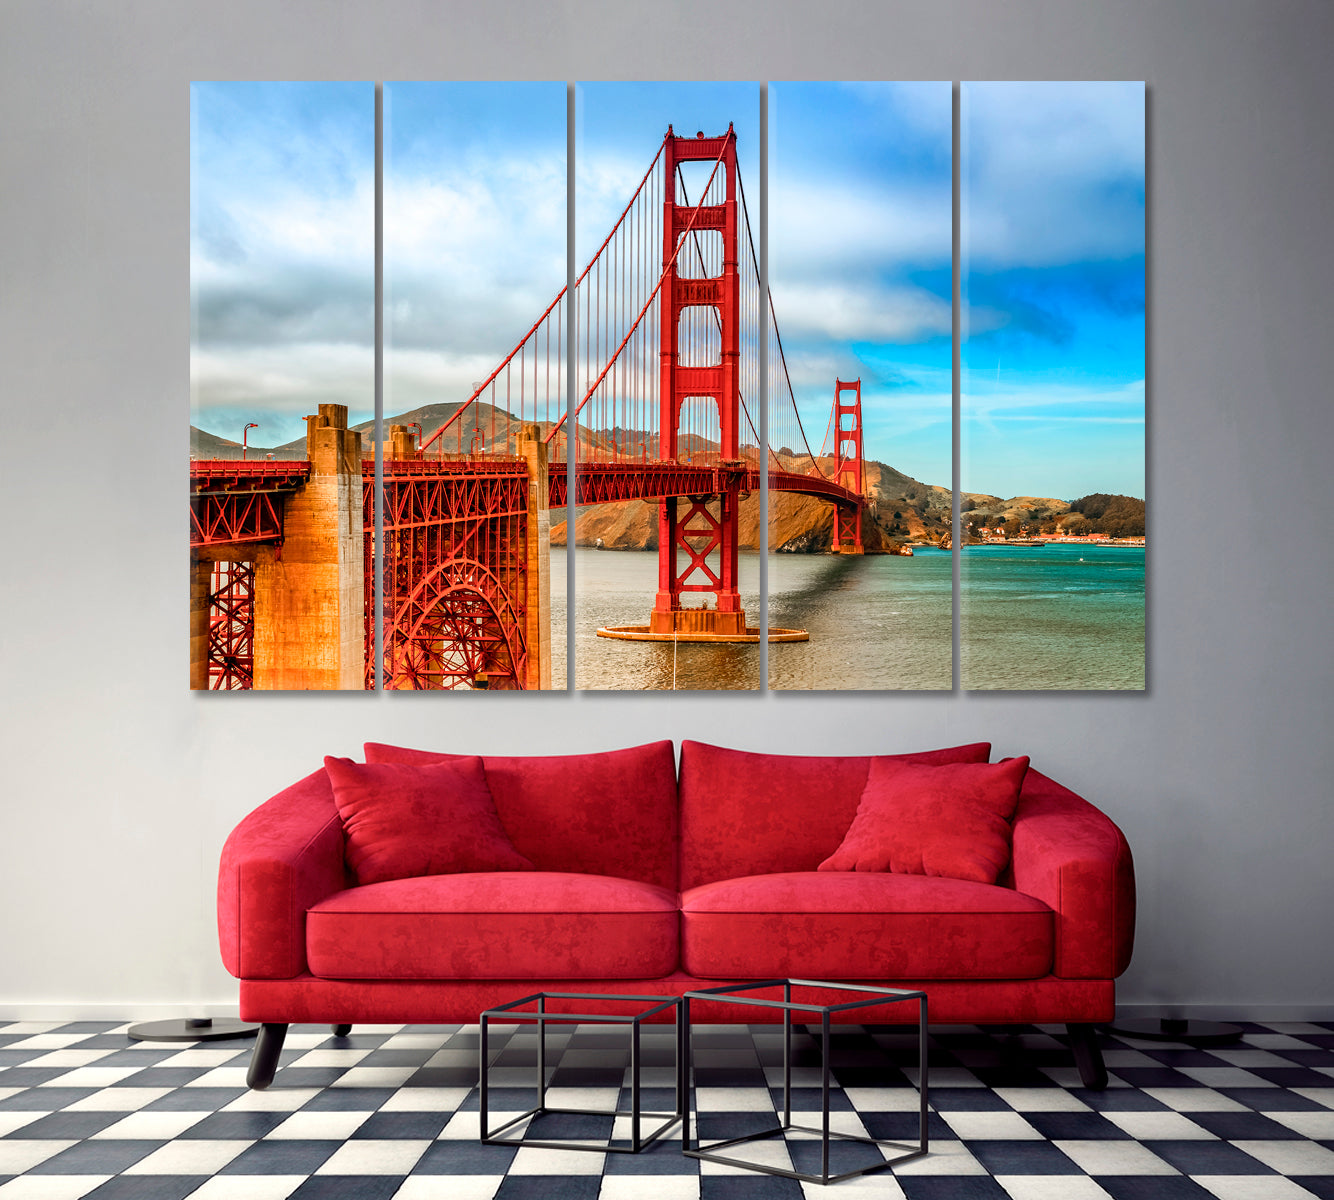 Famous Golden Gate Bridge San Francisco Poster Cities Wall Art Artesty 5 panels 36" x 24" 